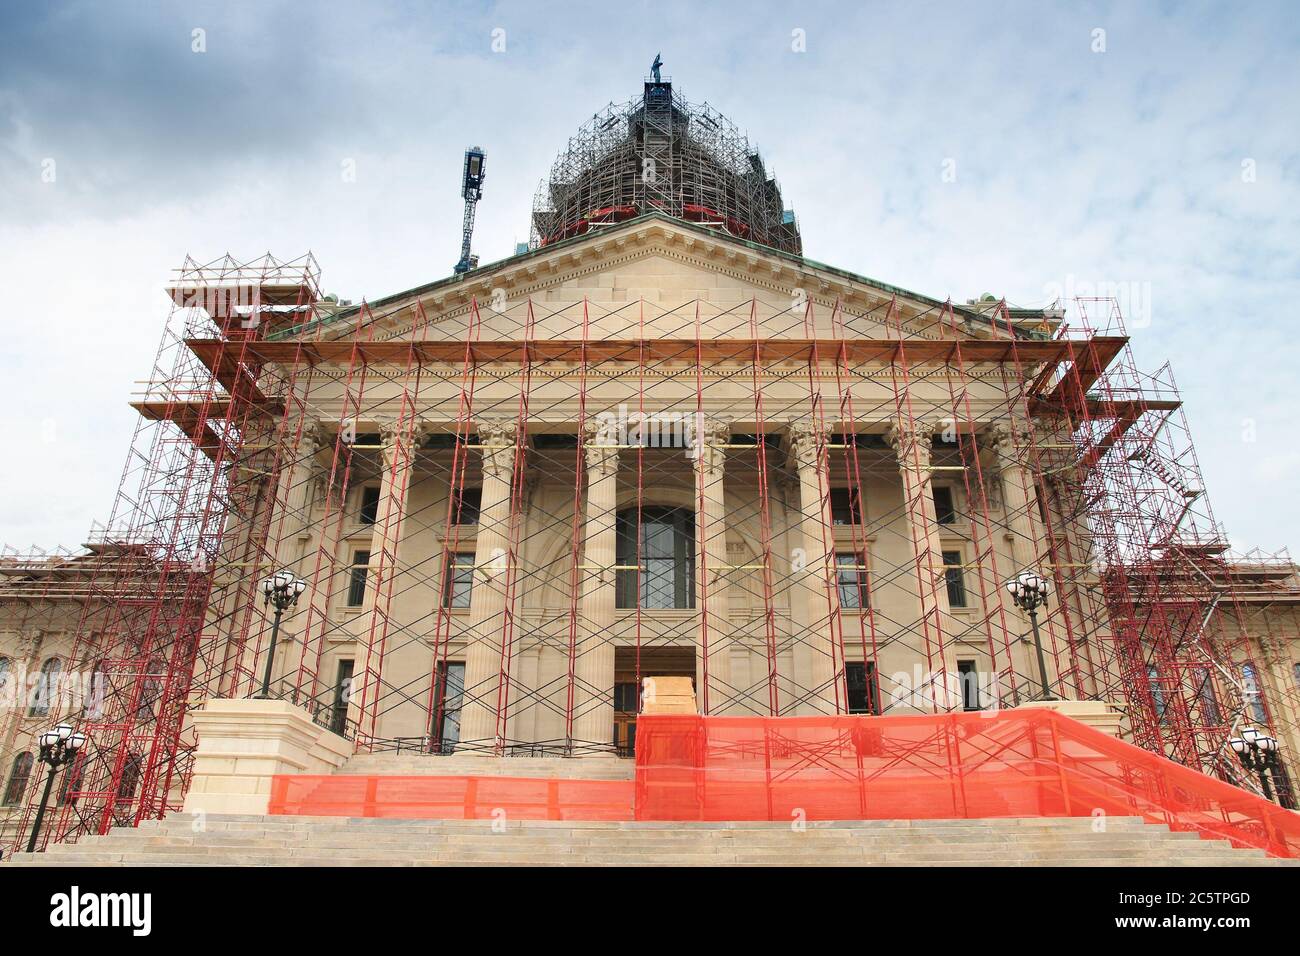 Kansas State Capitol renovation scaffoldings. Topeka, Kansas. City in the United States. Stock Photo